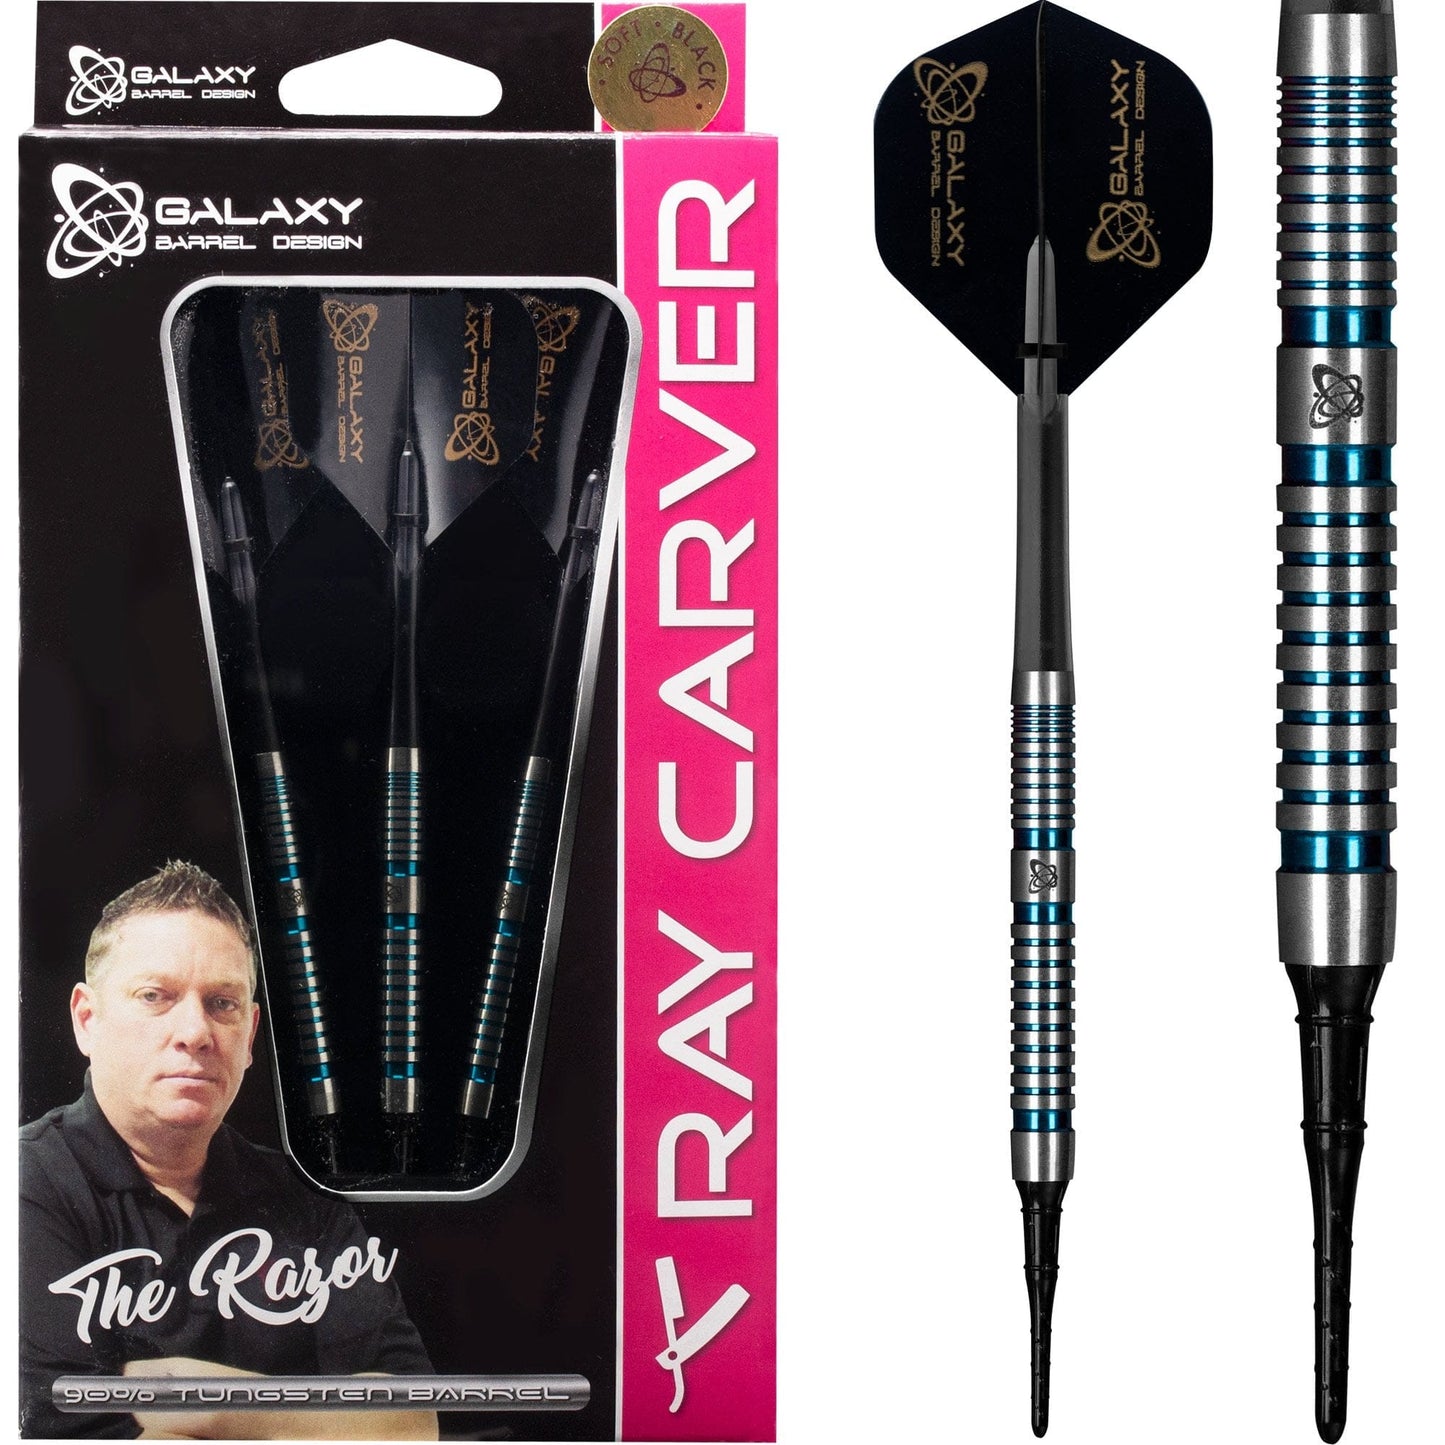 Galaxy Ray Carver Darts - Soft Tip - The Razor - Blue 20g